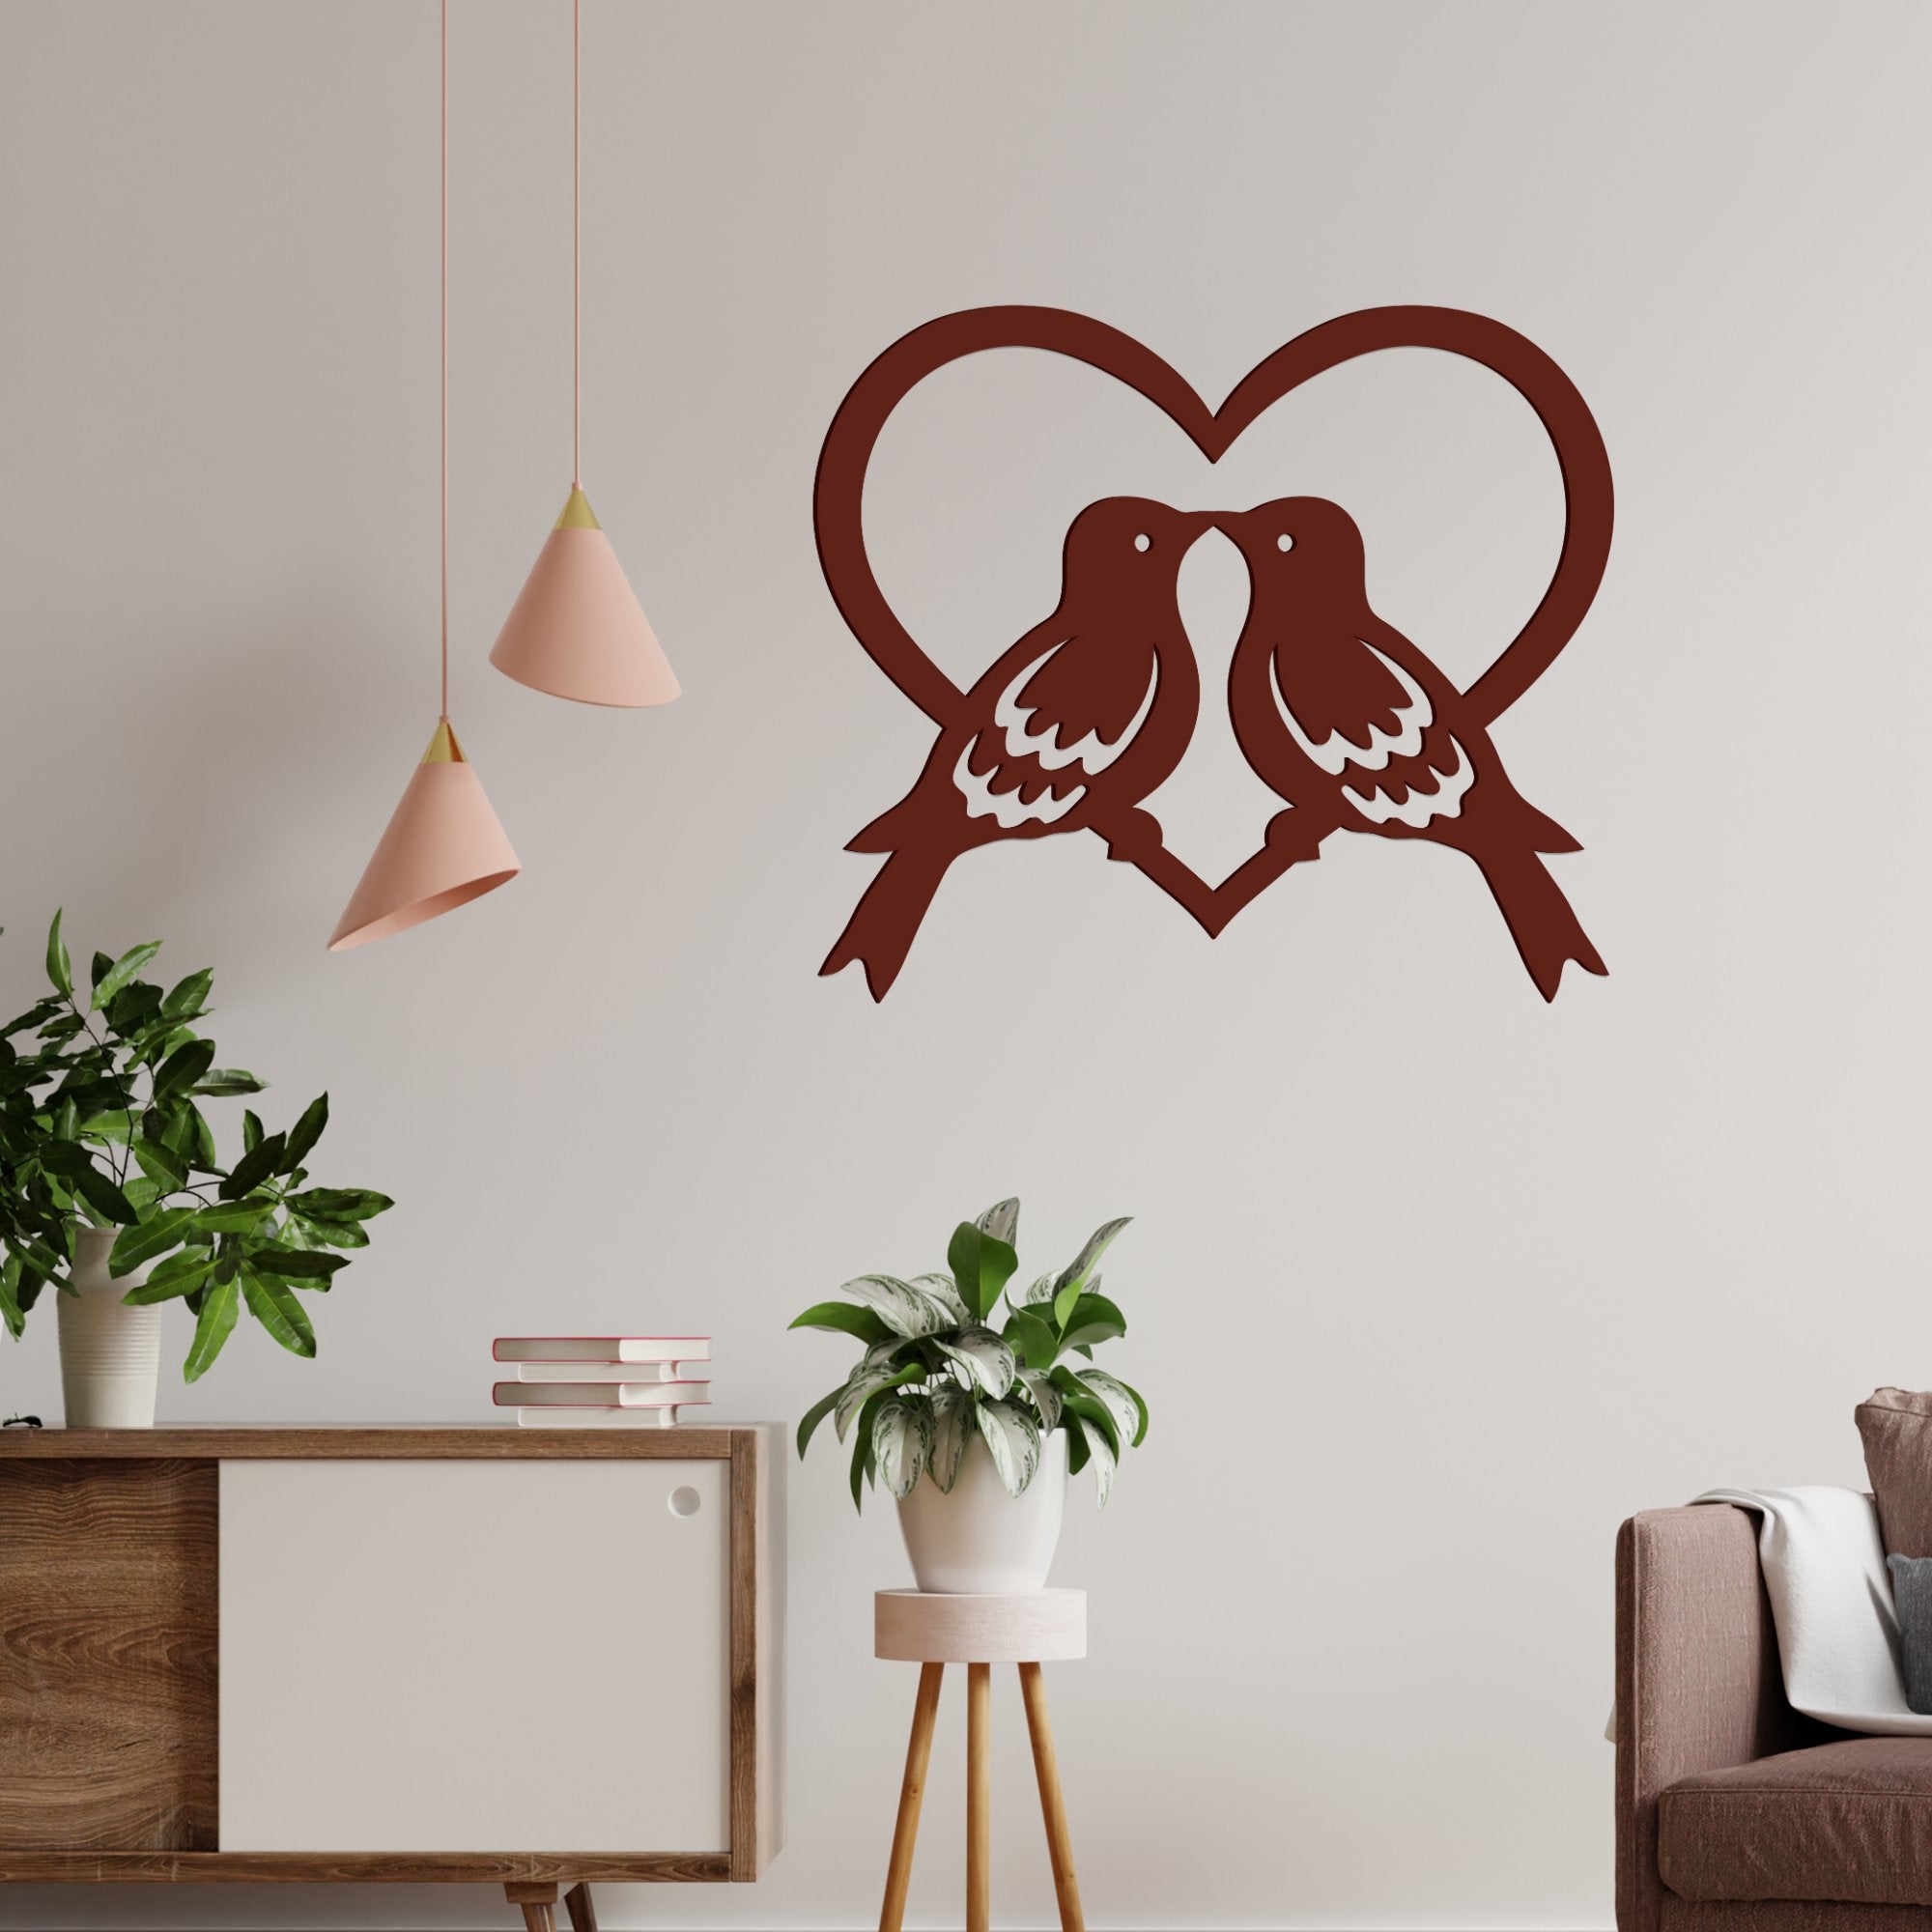 Birds in Heart Design Premium Quality Wooden Wall Hanging